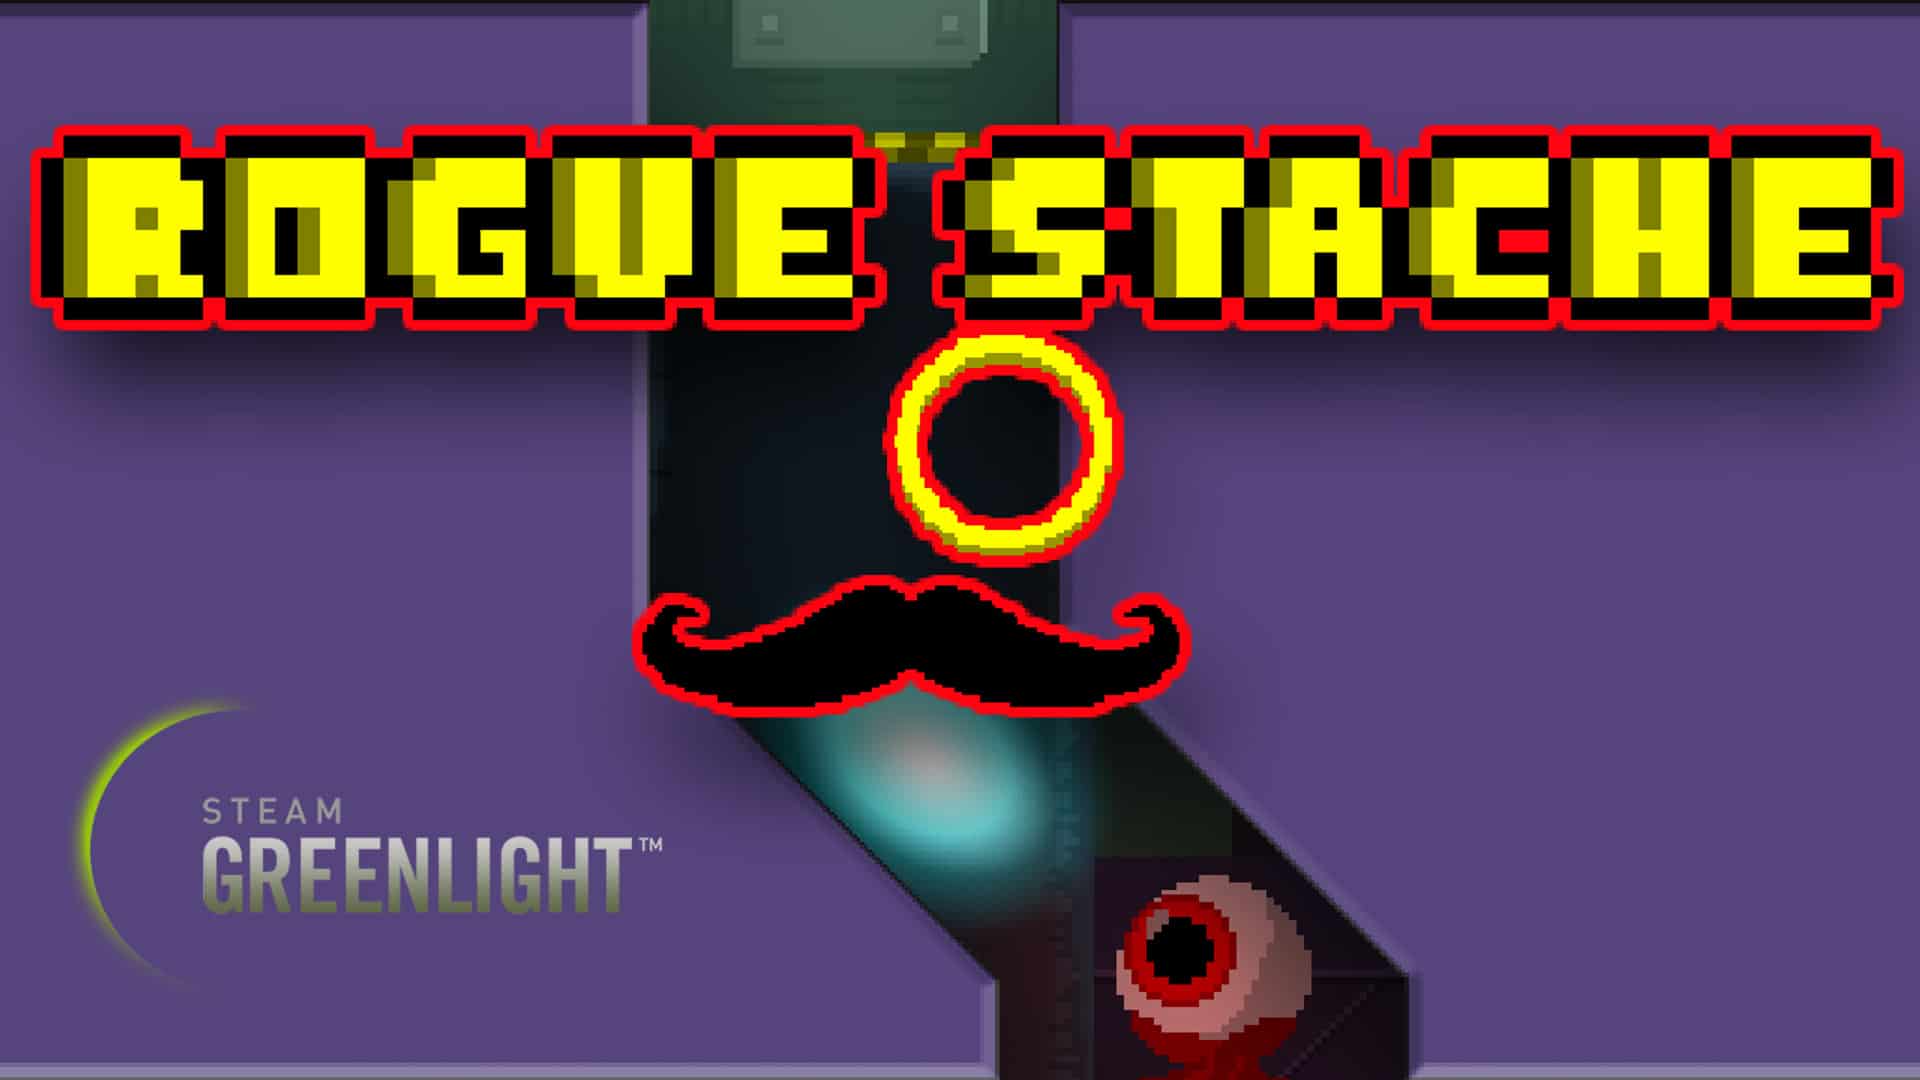 Rogue Stache